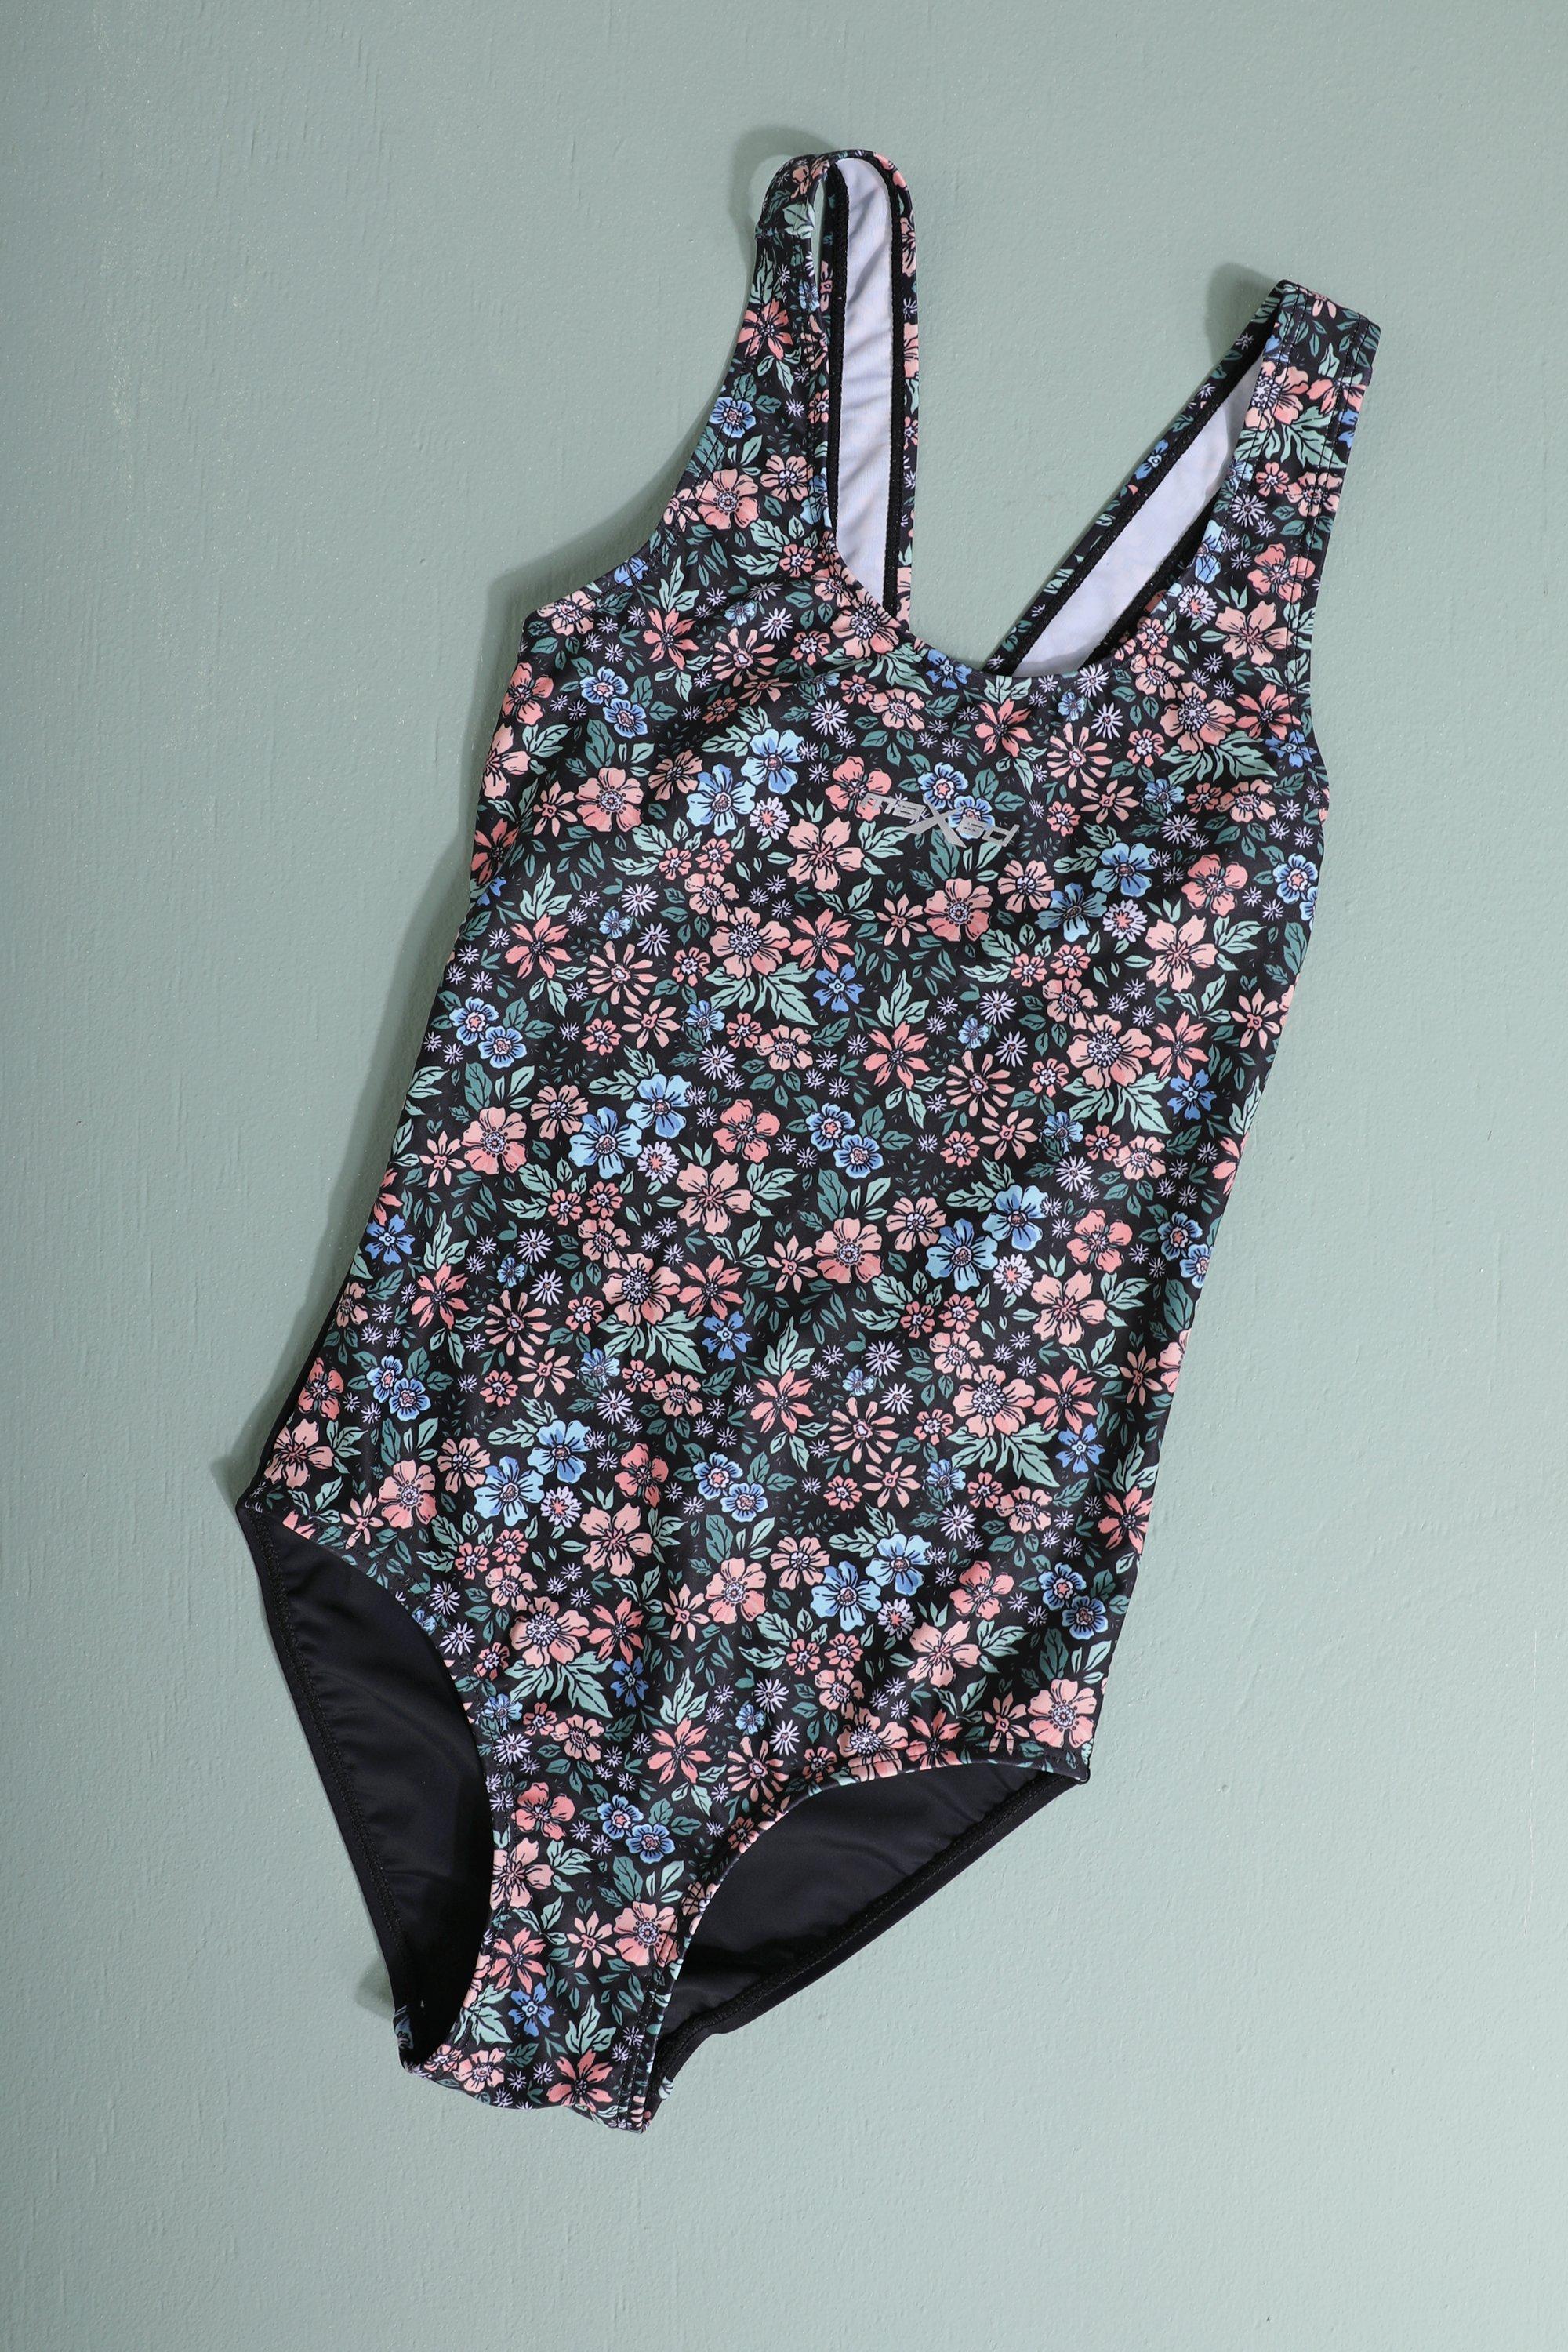 One-piece Swimming Costume